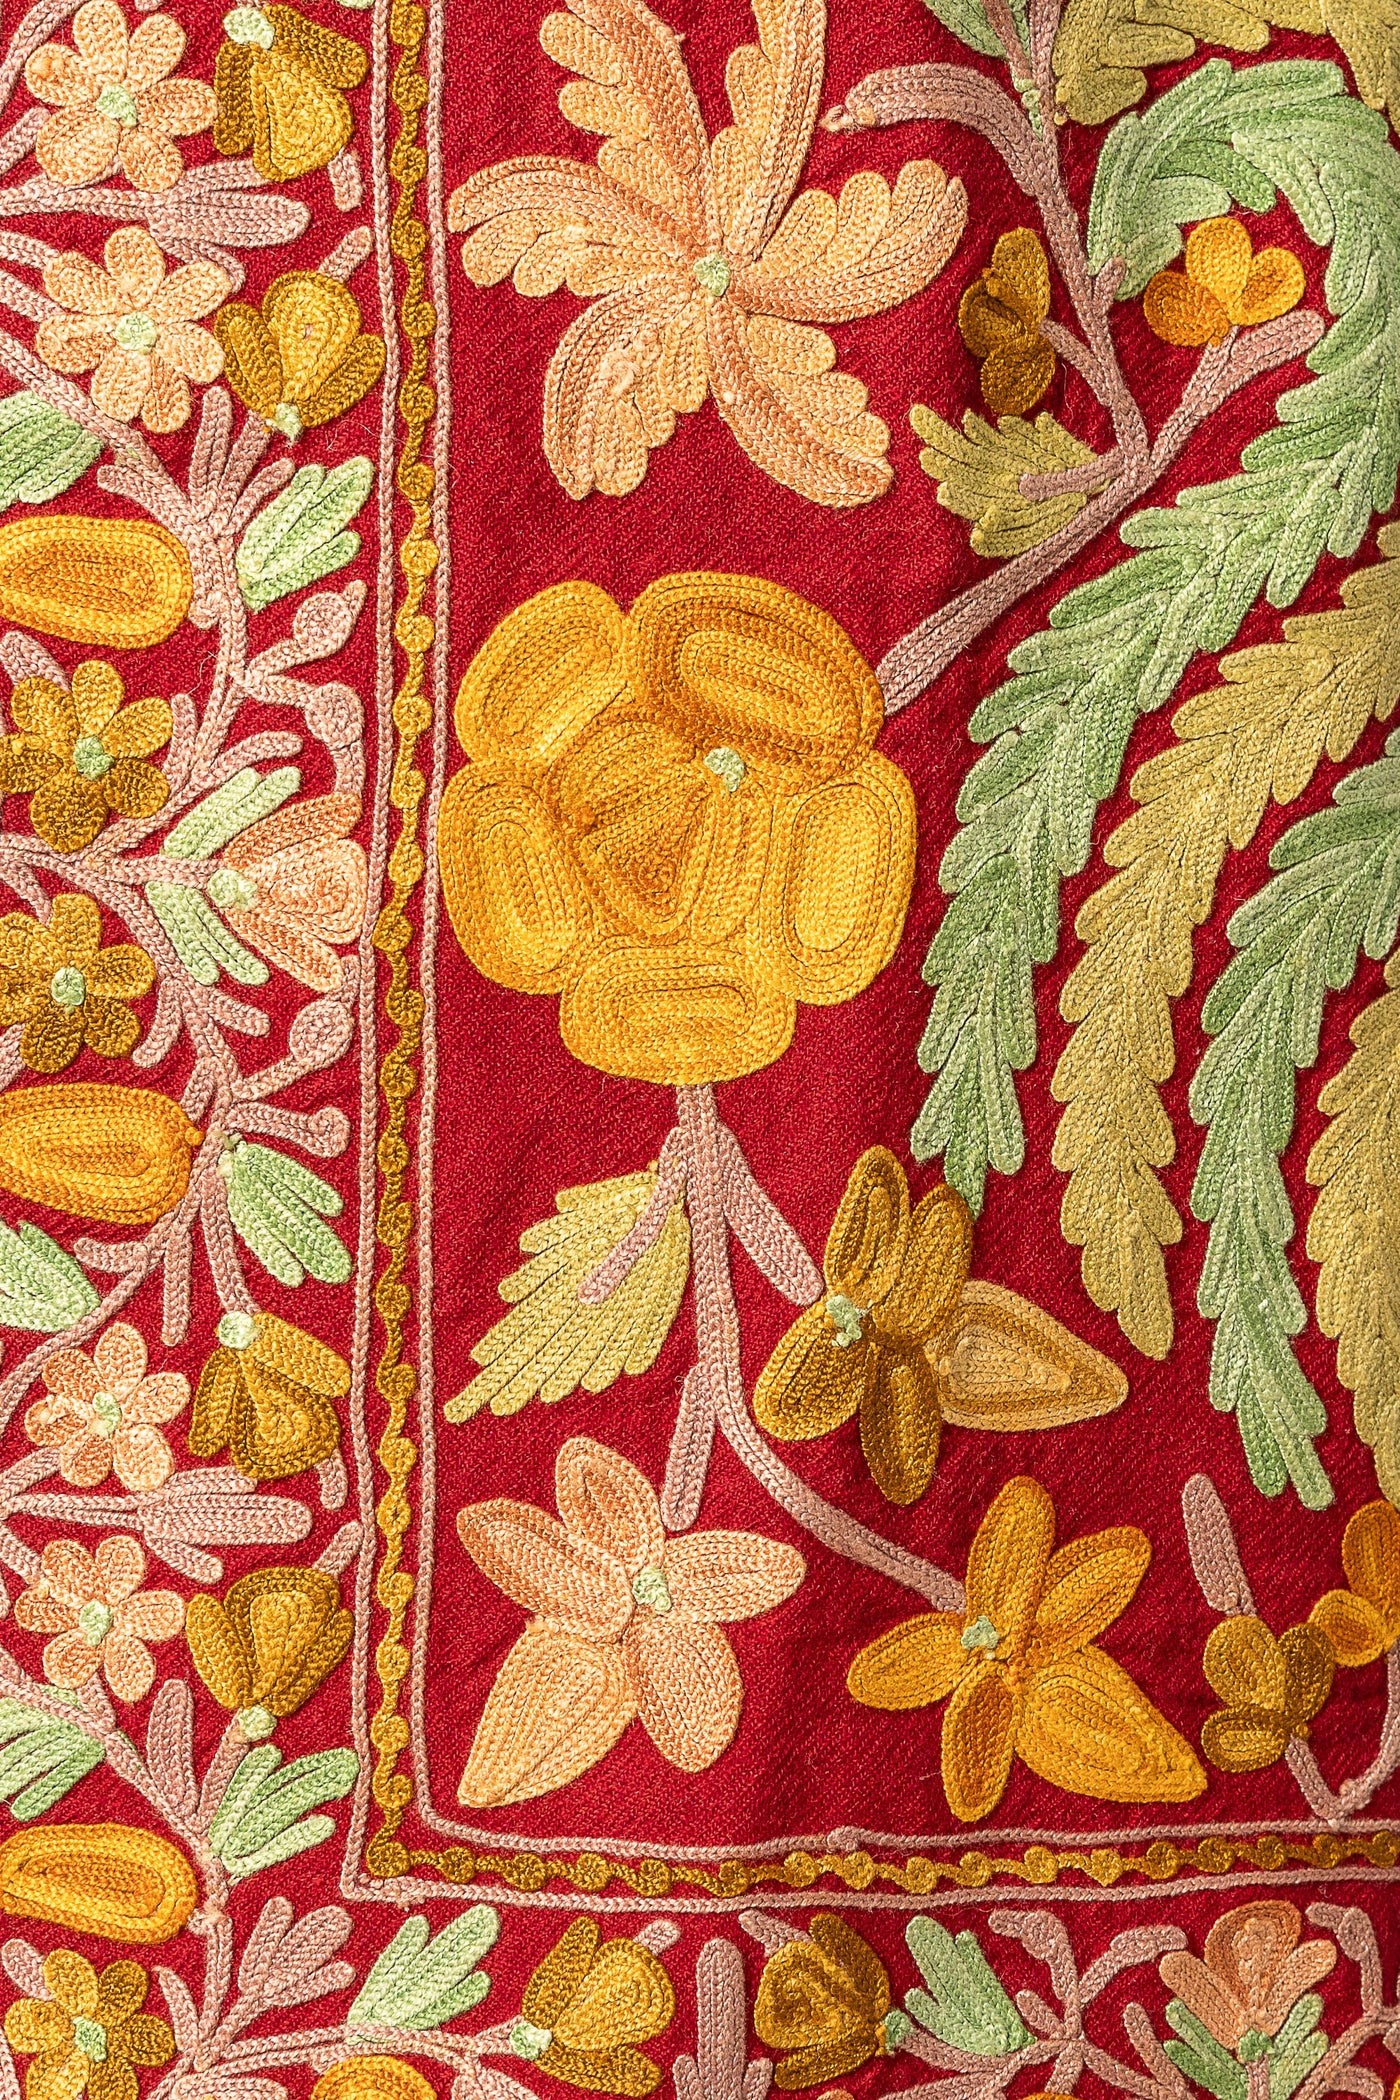 Maroon Aari Kashmiri Jacket with Floral Patterns